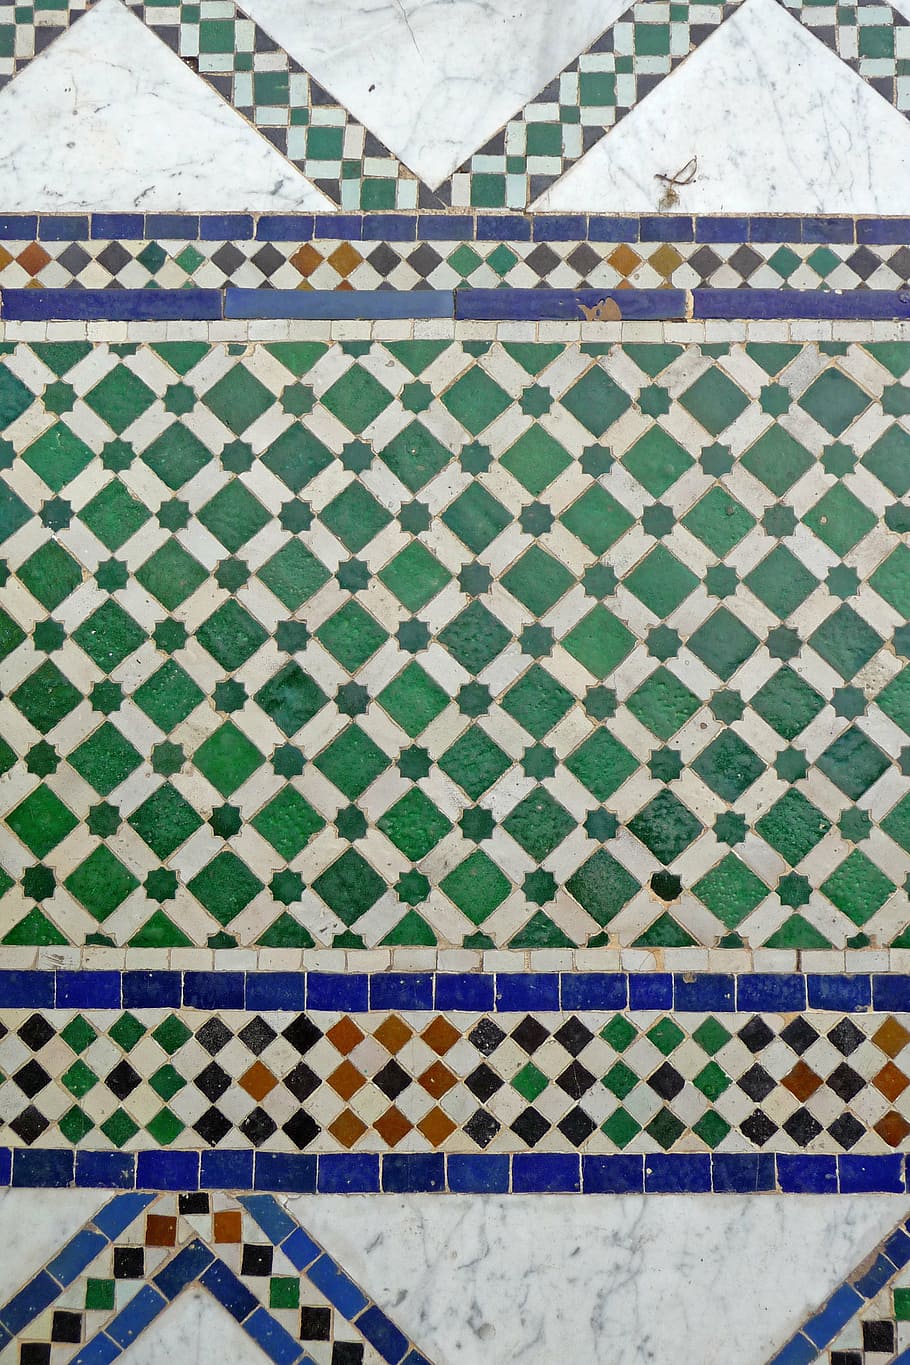 bahia, palais, palace, marrakech, tiles, blue, green, arabic